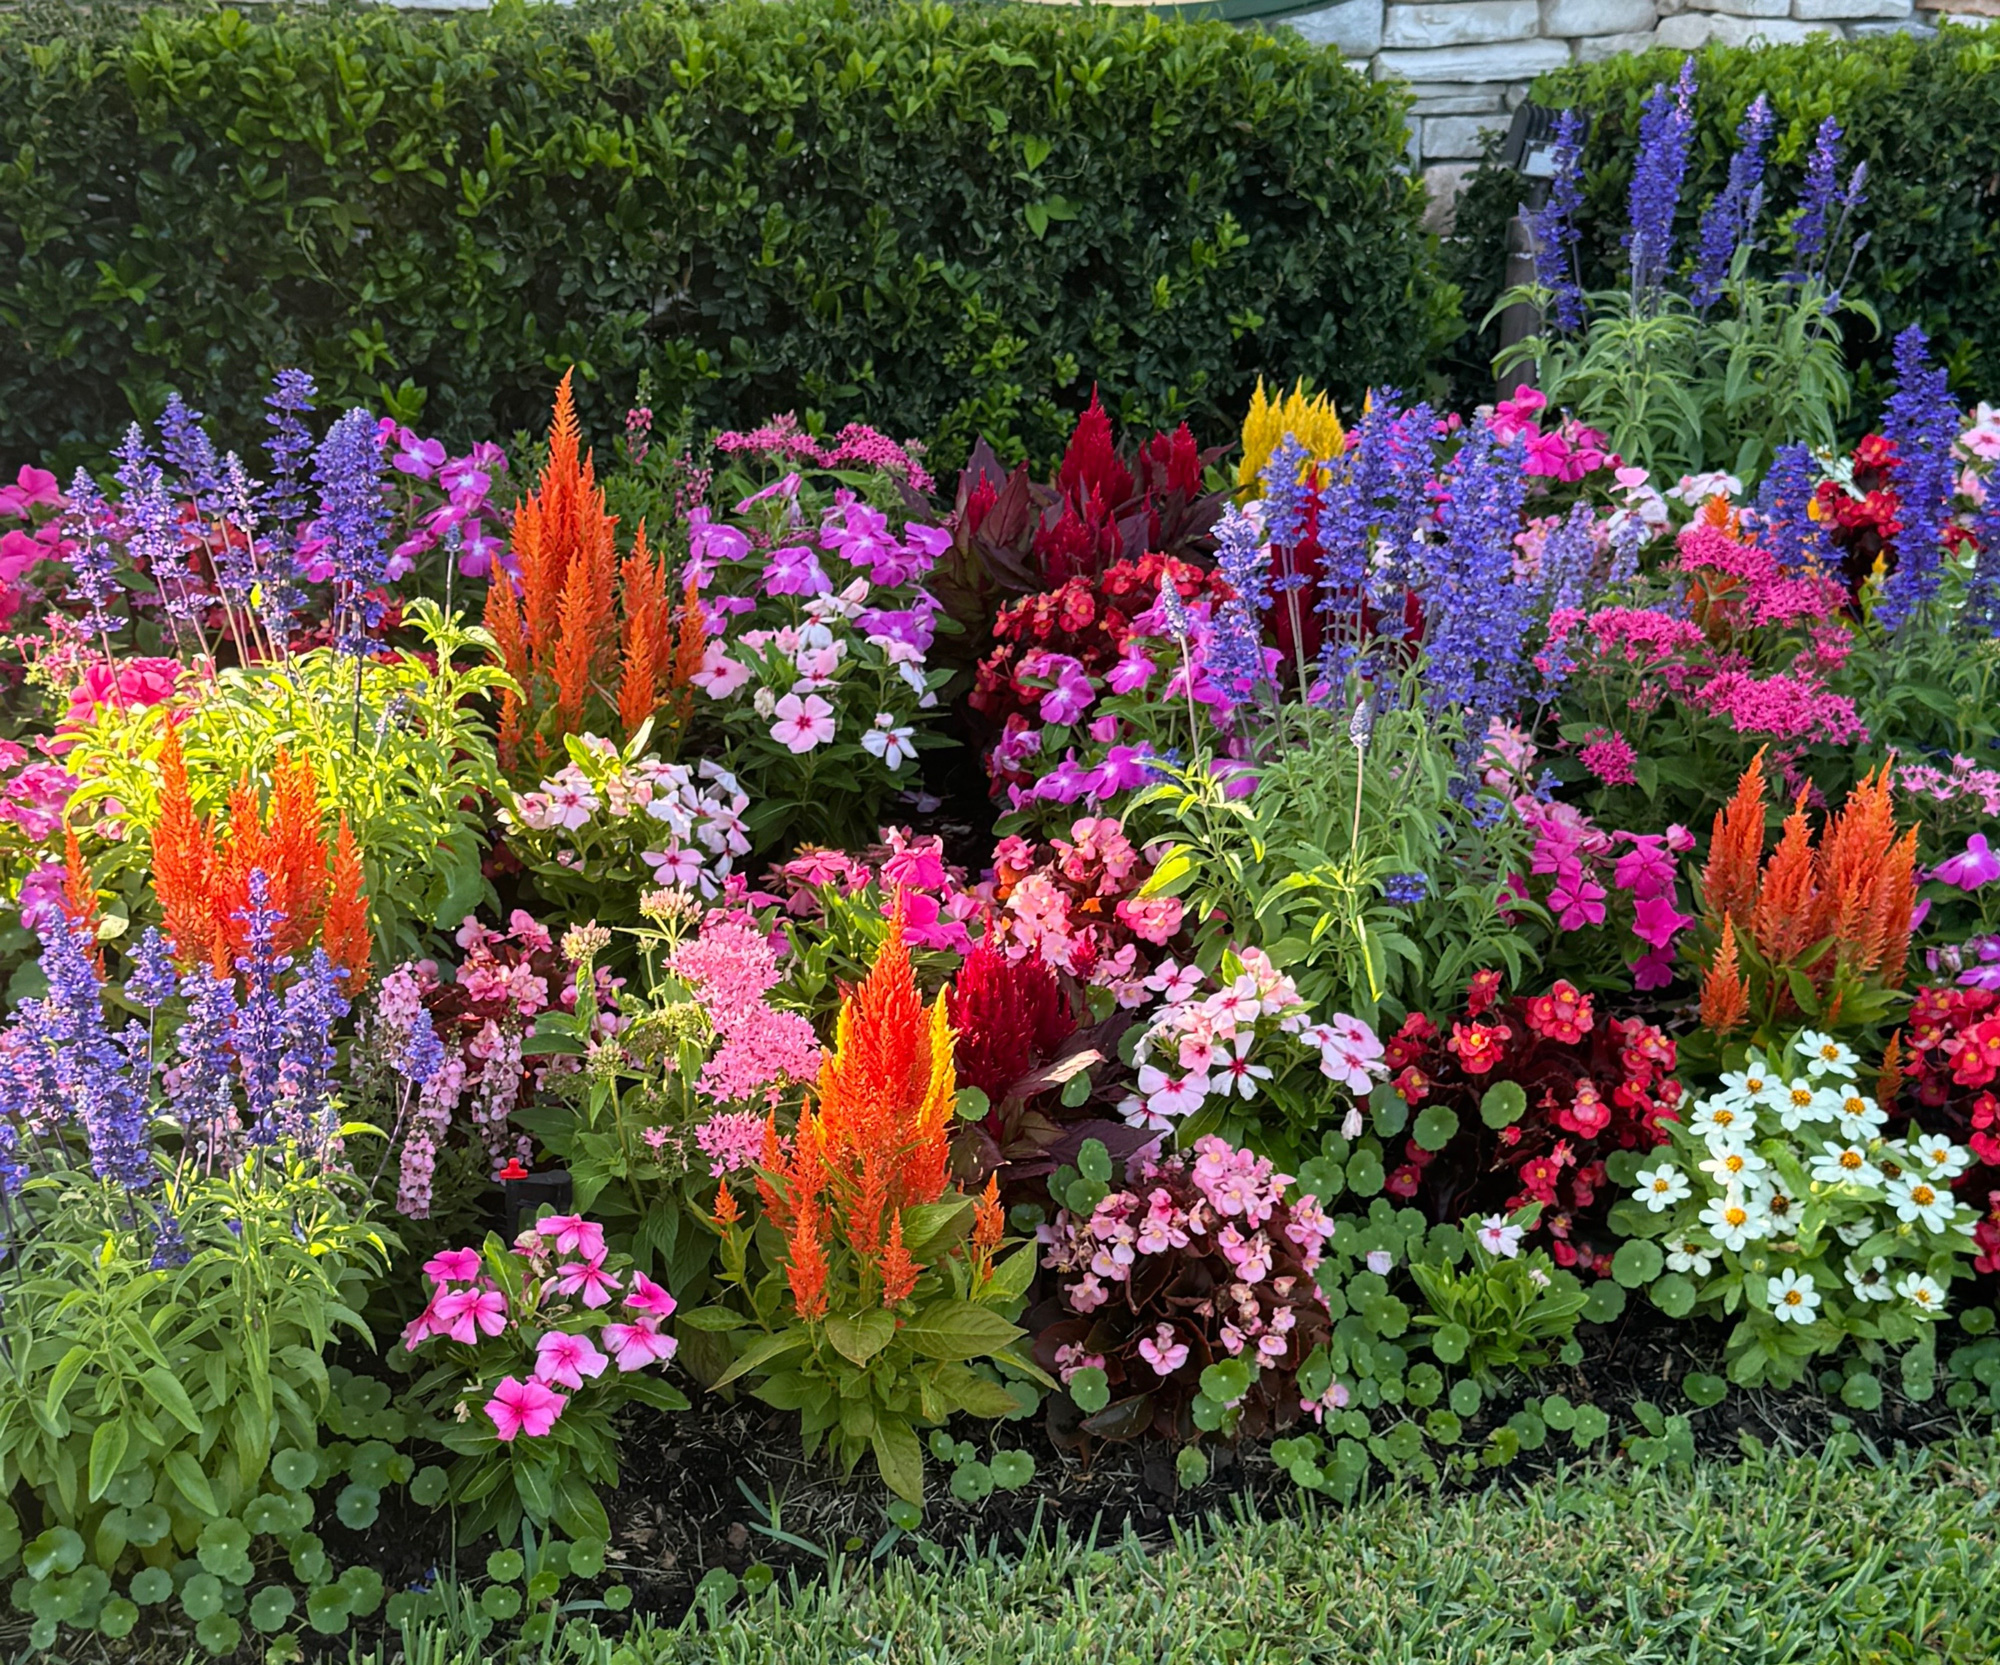 Photo of beautiful colorful flowers from my neighborhood